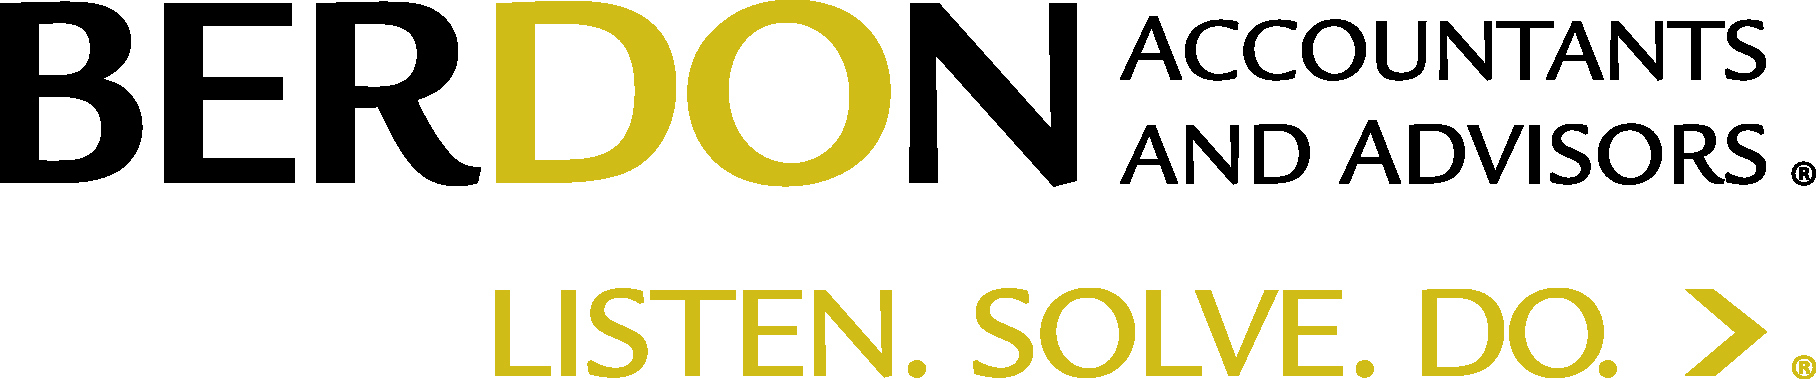 Berdon LLP logo